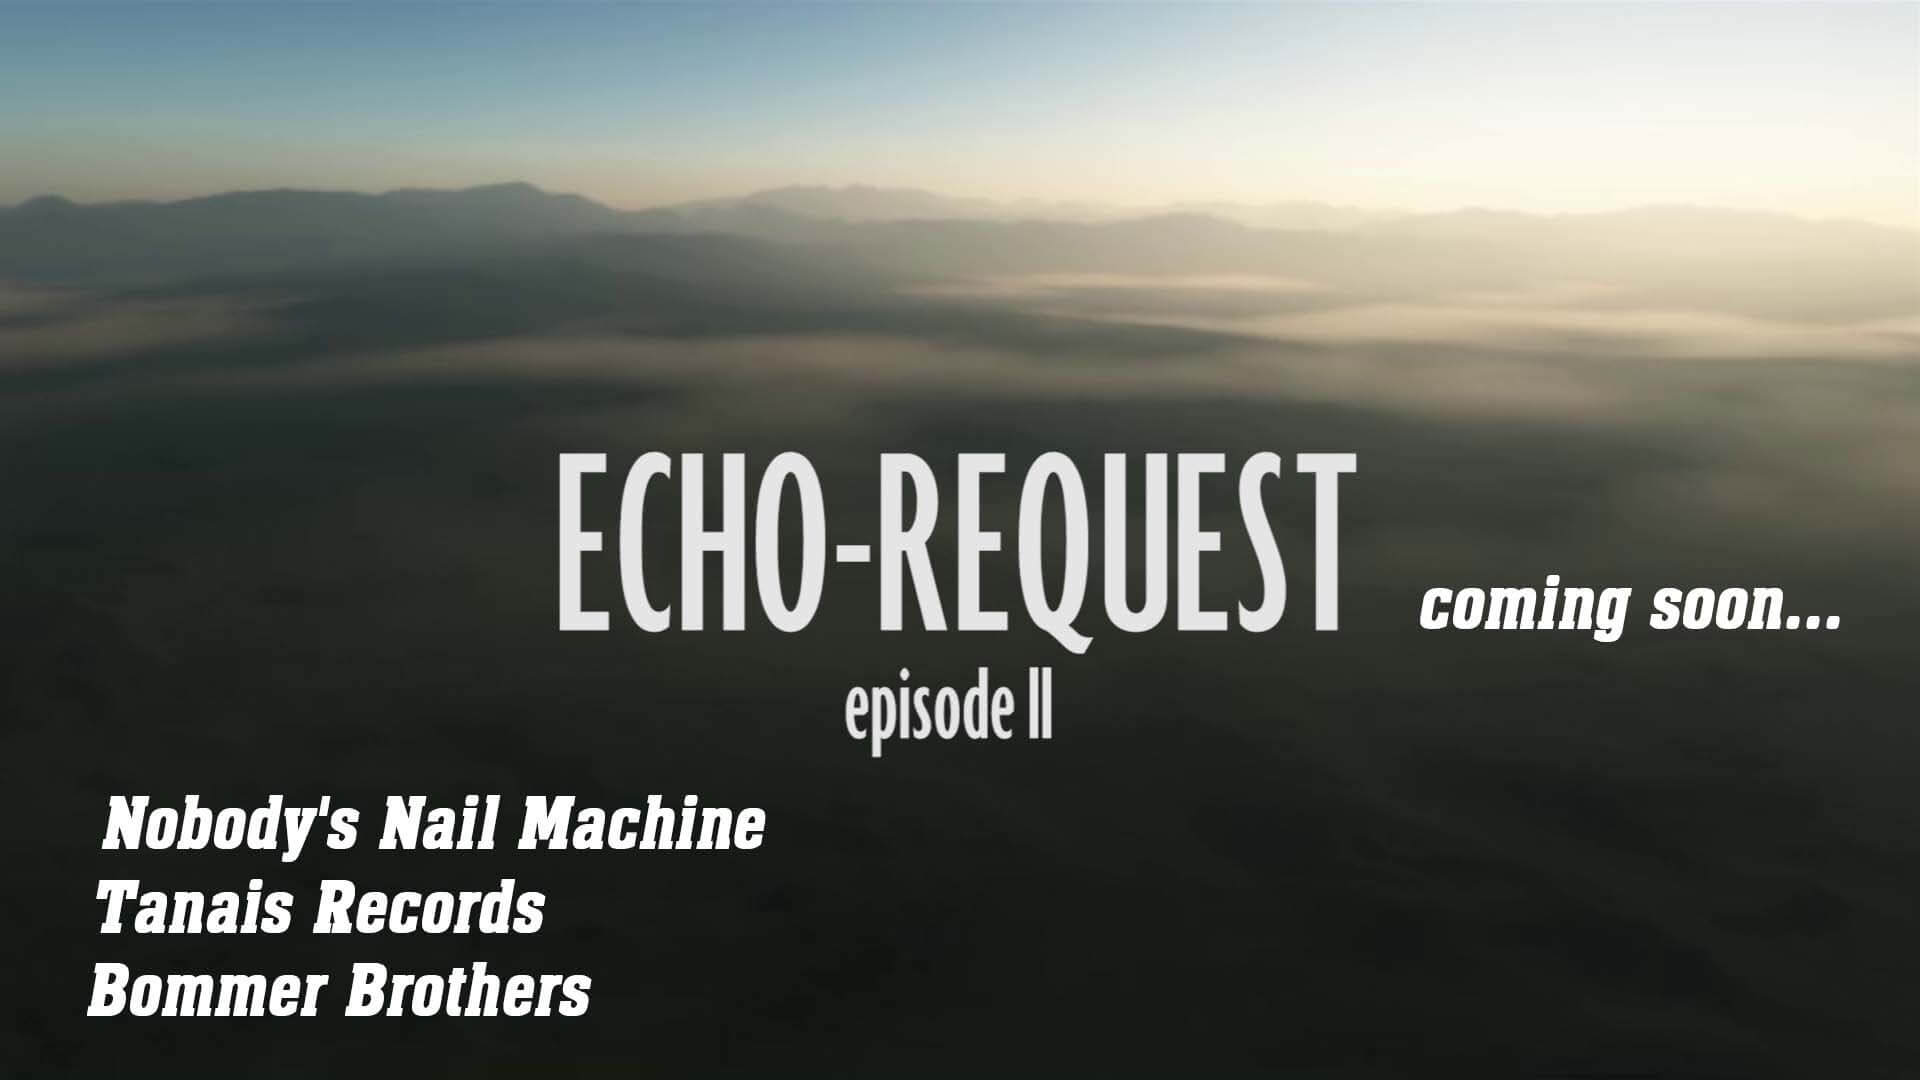 echo request trailer 2 - Uncategorized